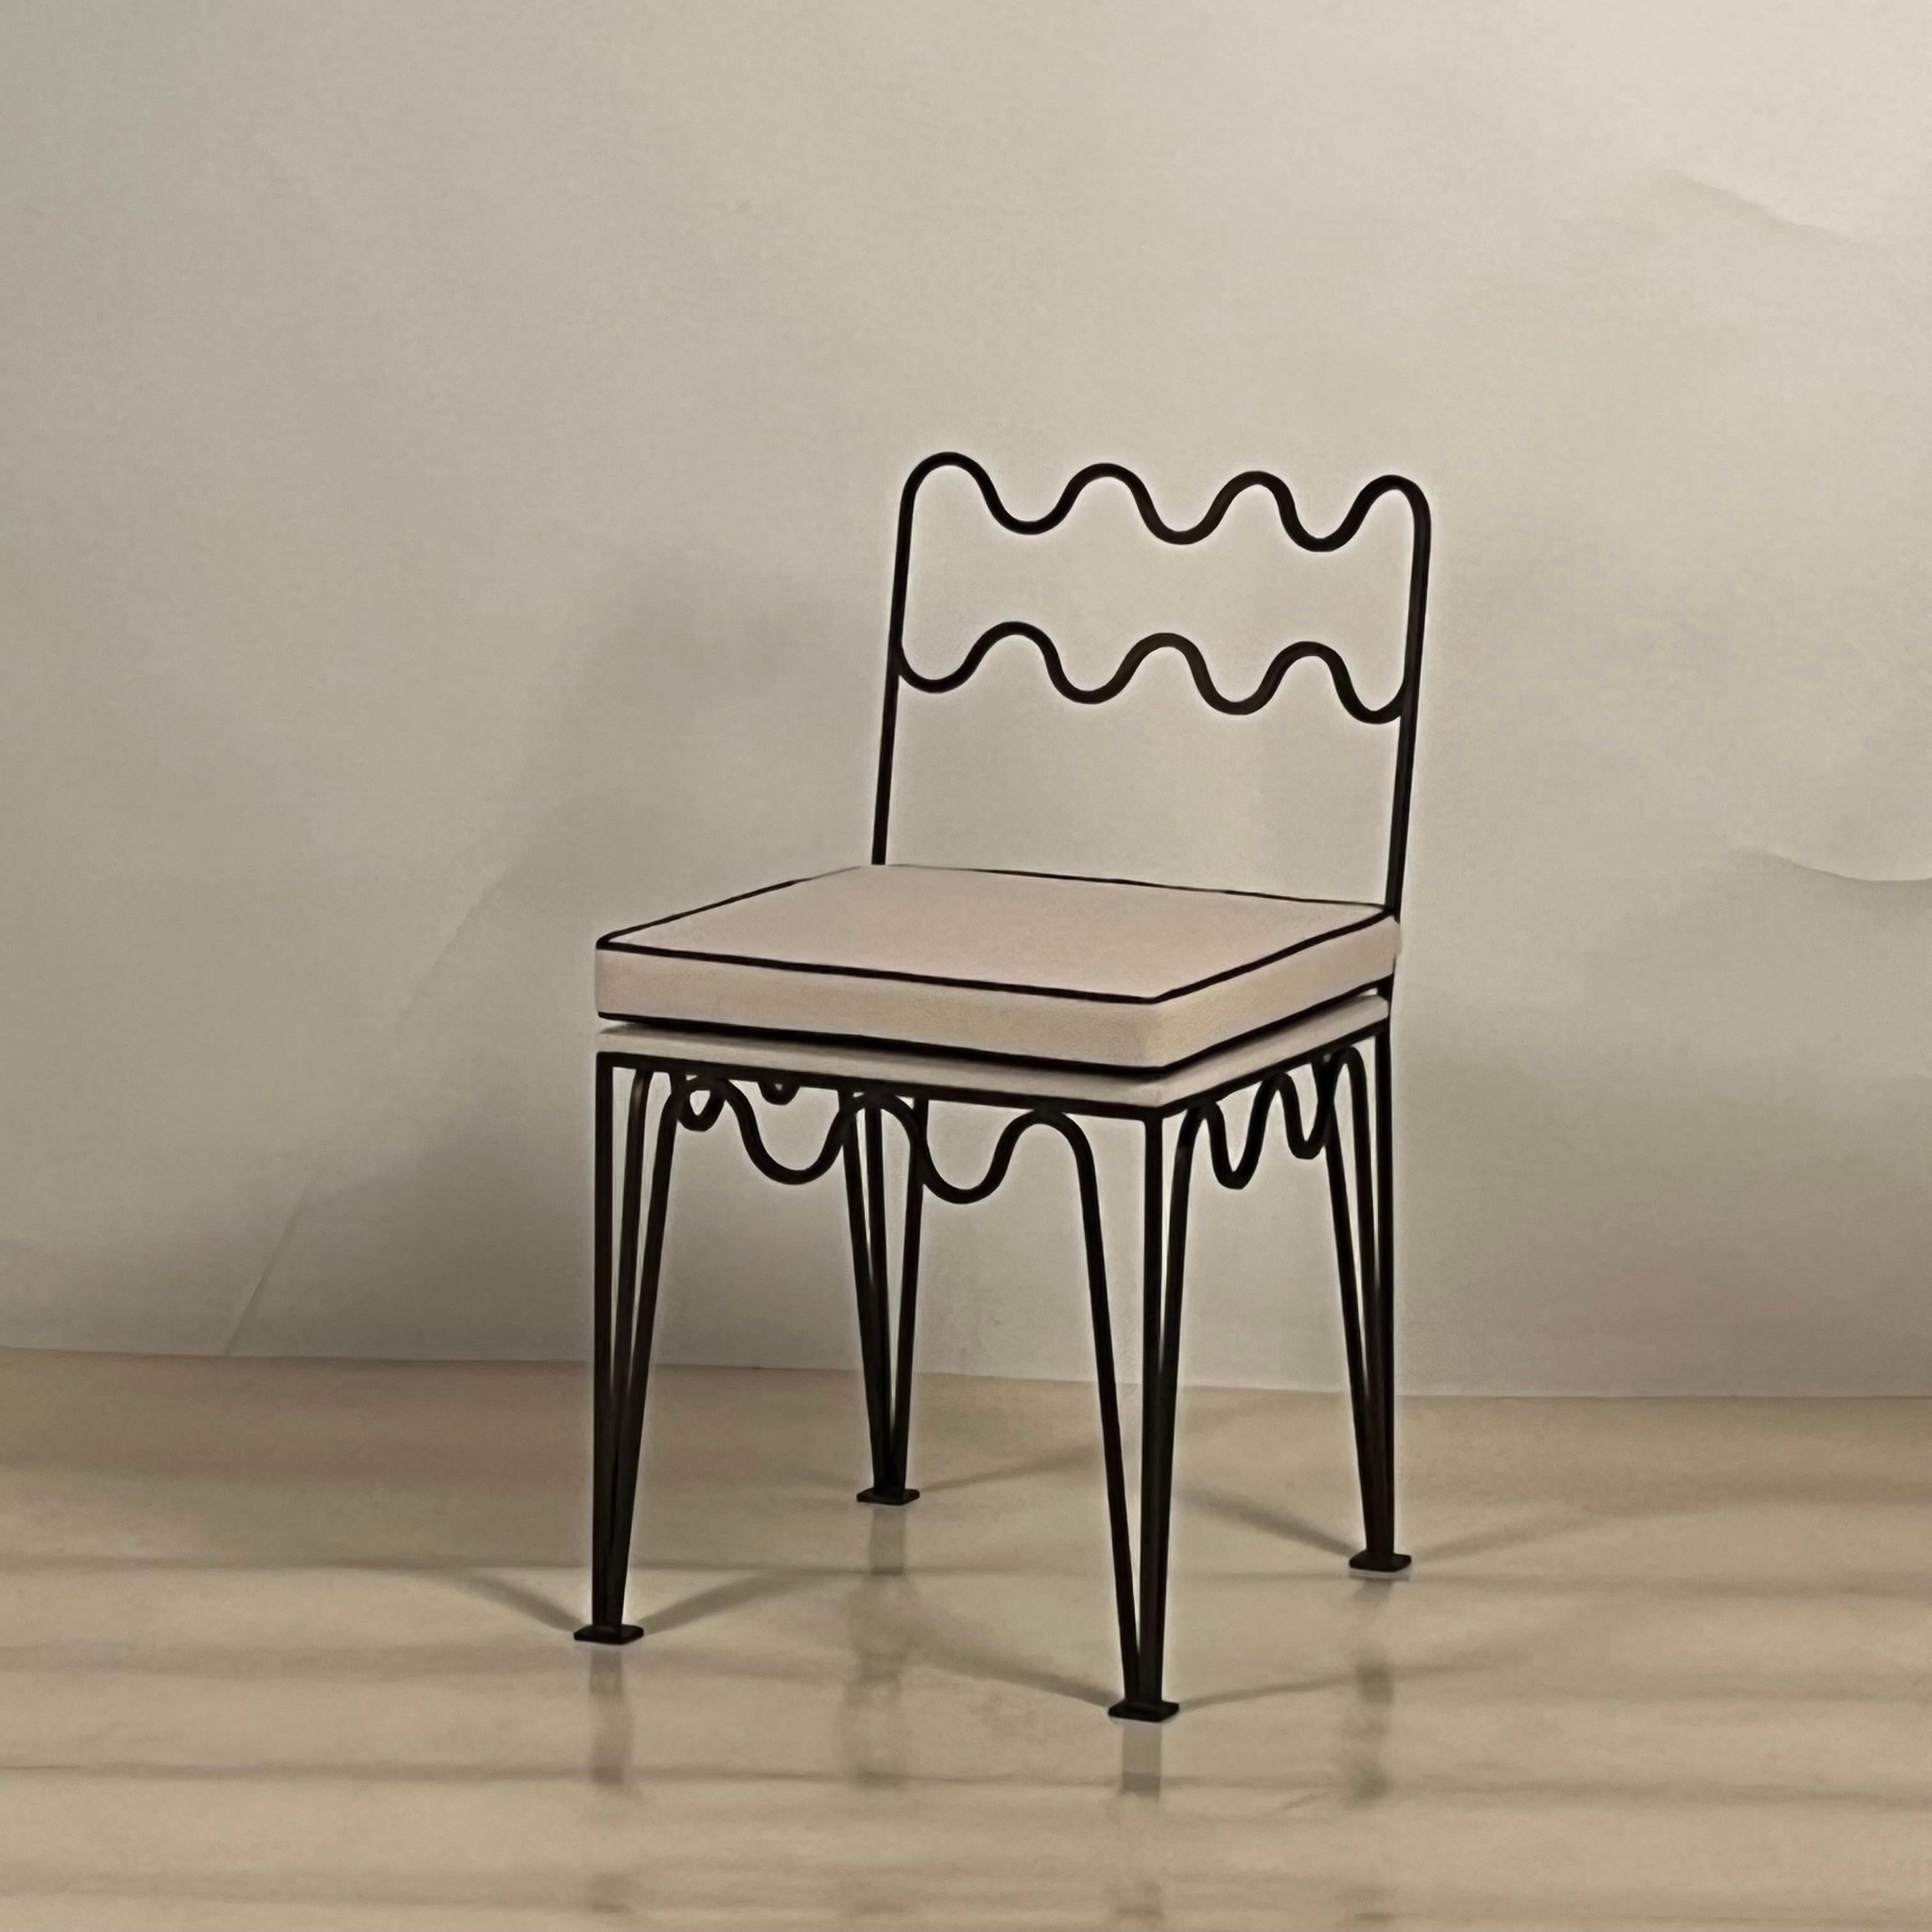 Undulating dark bronze 'Méandre' chair by Design Frères.

Chic and understated.